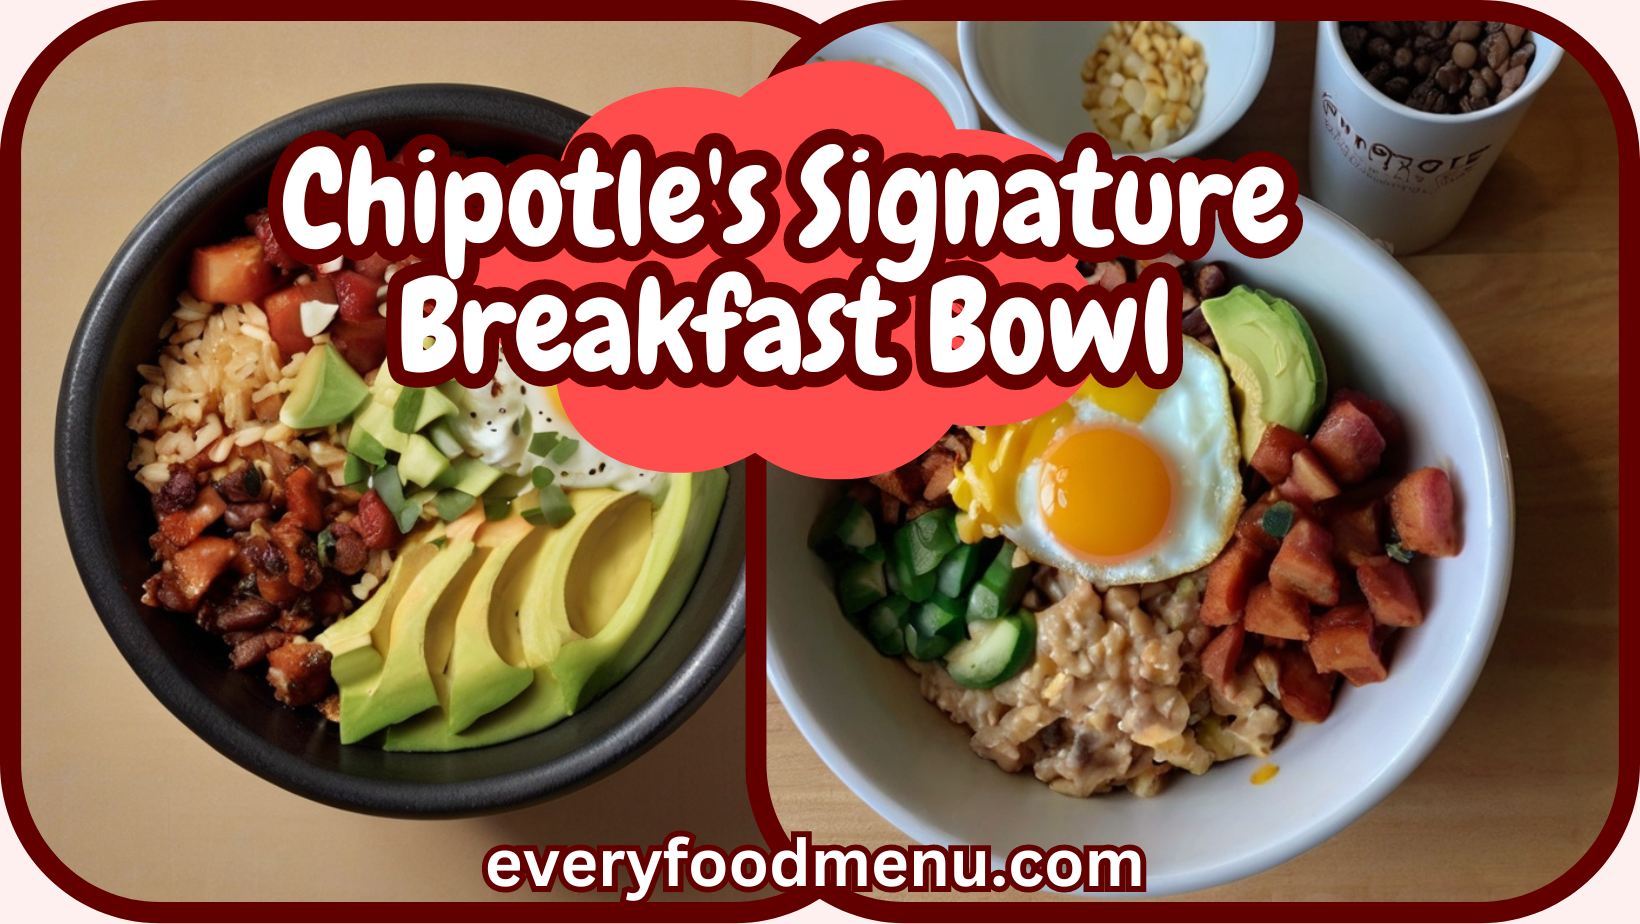 Chipotle's Signature Breakfast Bowl